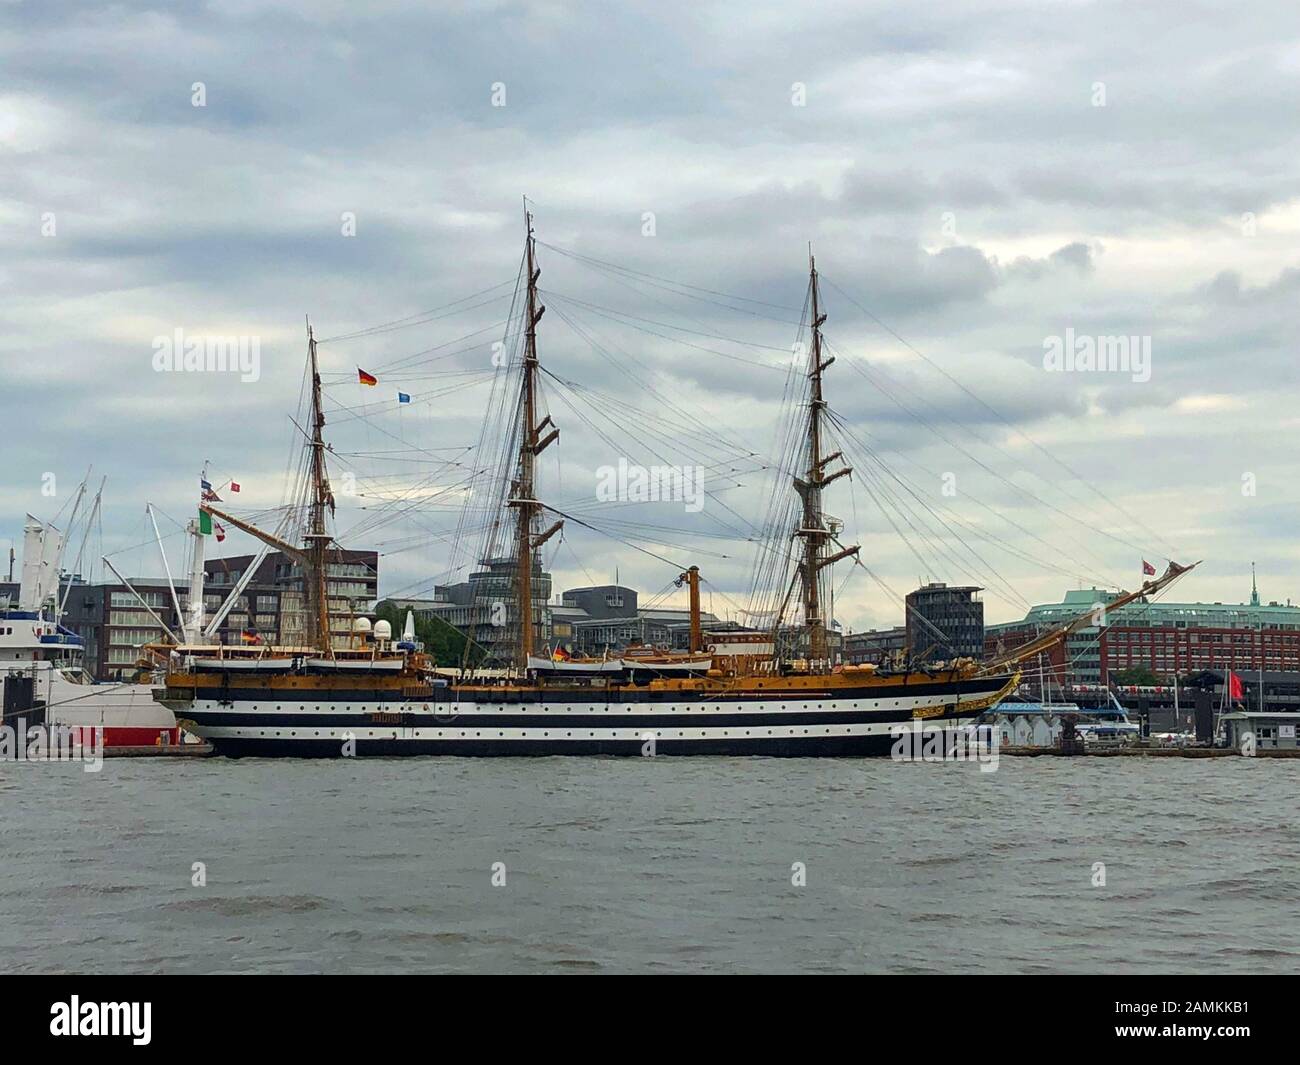 Hamburg,Germany - August 17,2018: Amerigo Vespucci ship. This sailing ship of the Navy built as a training ship for the training of the official stude Stock Photo